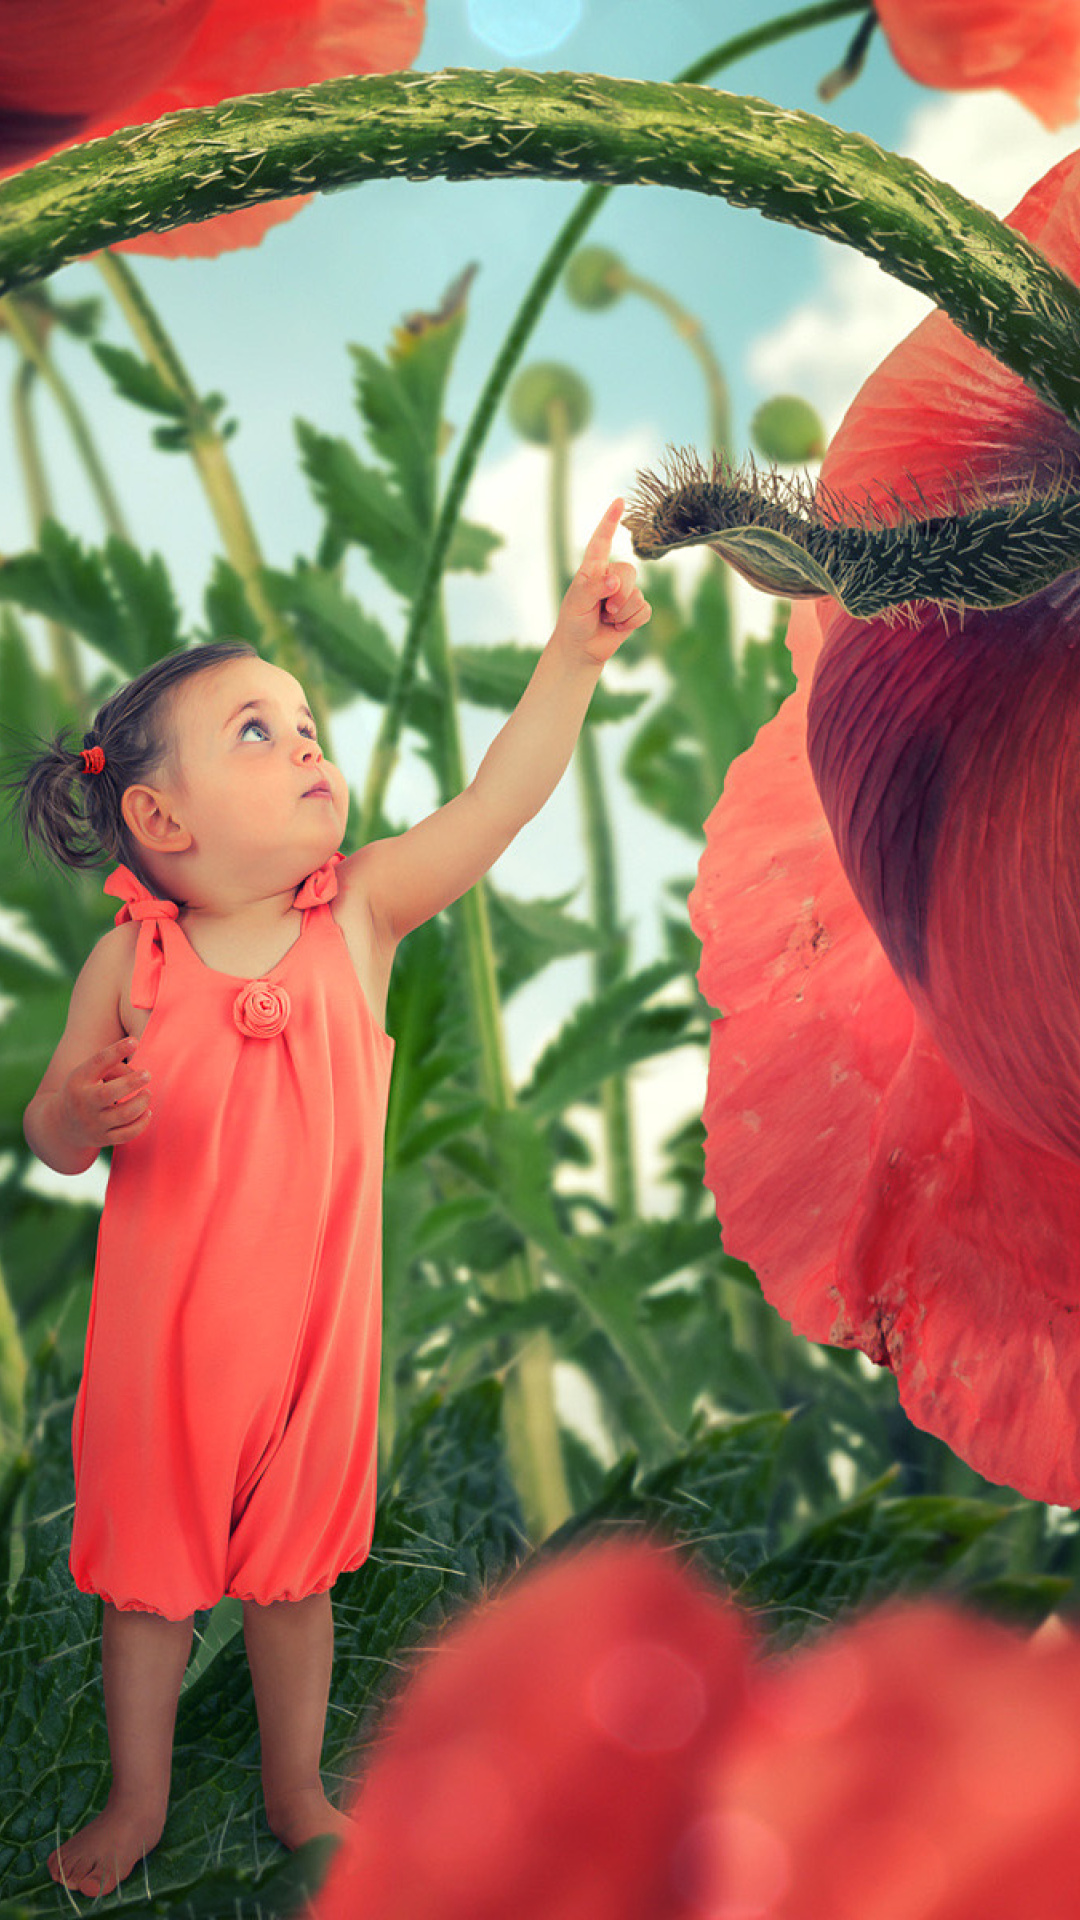 Little kid on poppy flower wallpaper 1080x1920